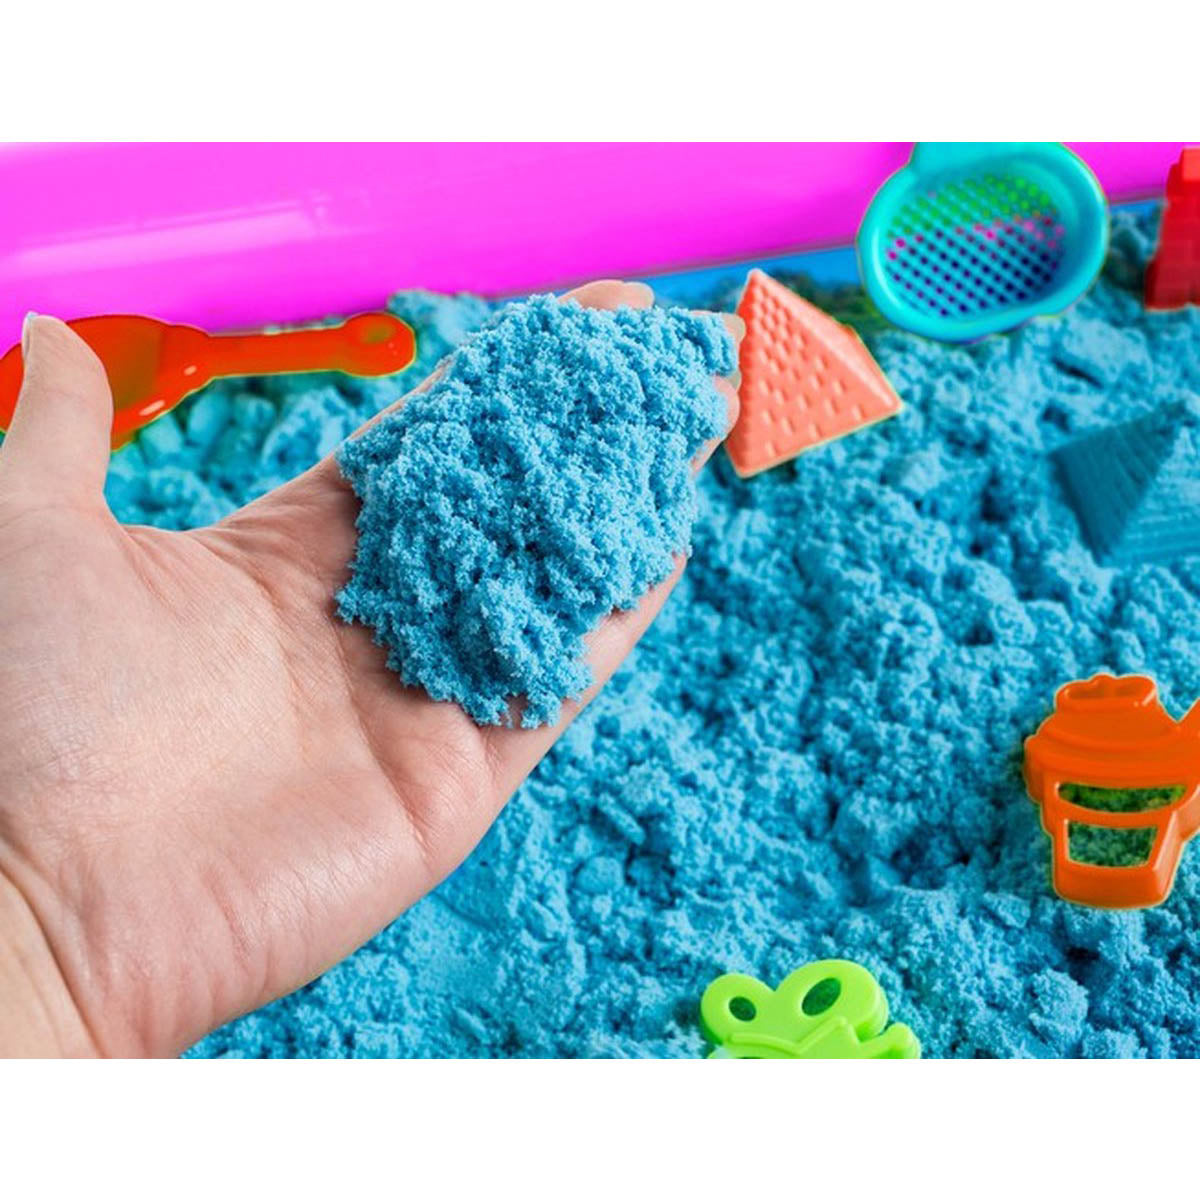 <tc>Ariko</tc> Magic Sand, 1 KG - Indoor Sand with Accessories - 14 Molds - Inflatable Sandbox